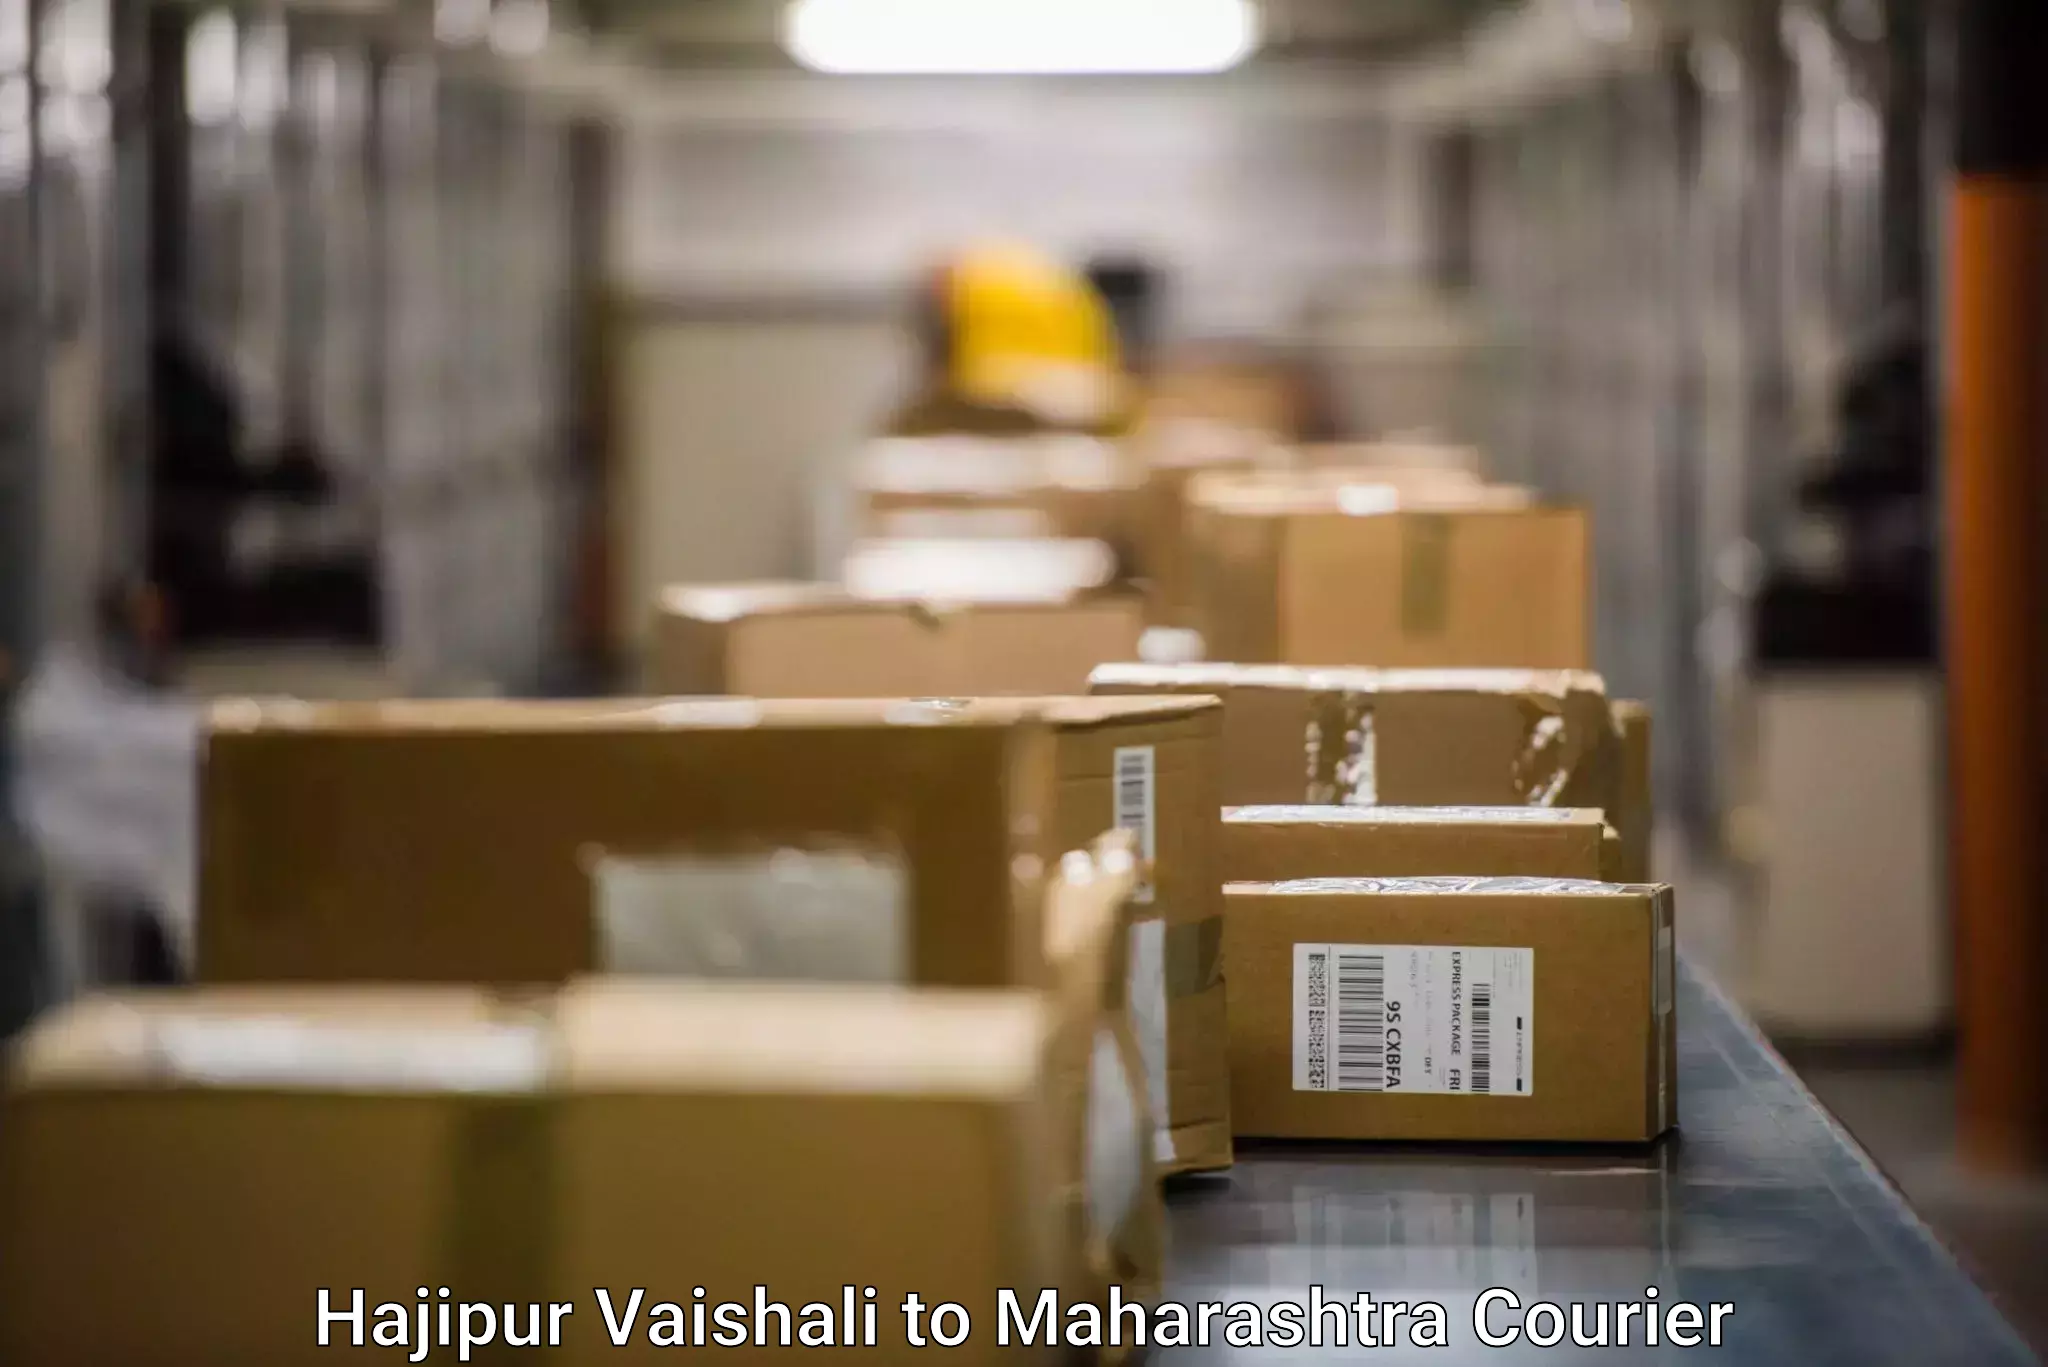 Premium delivery services Hajipur Vaishali to Khandala Pune